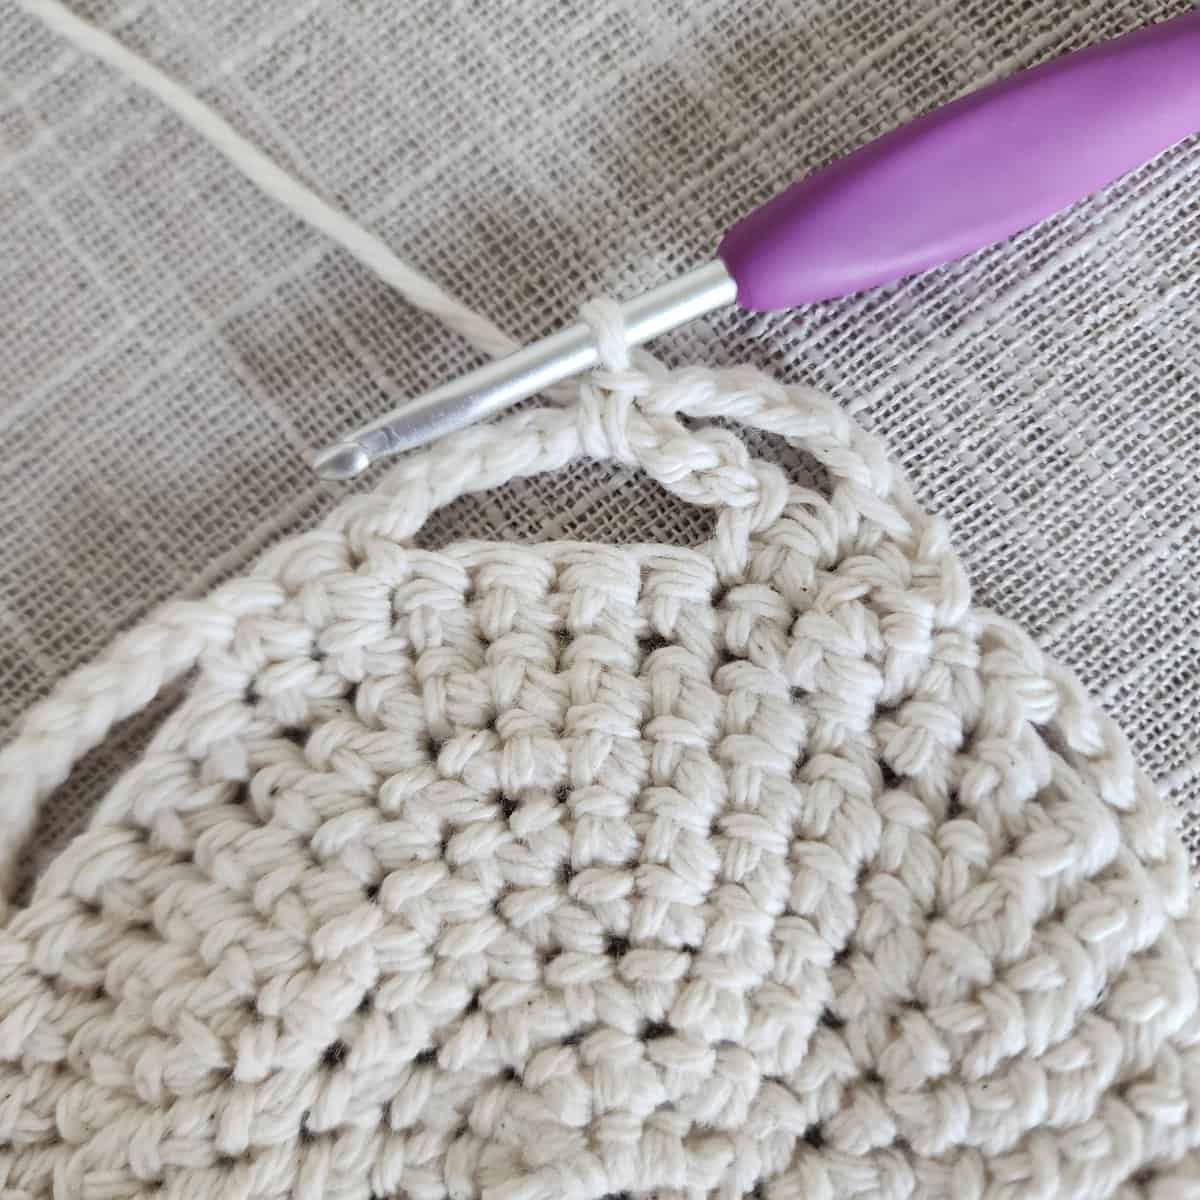 Close up of purple crochet hook making crochet lace on plant basket.